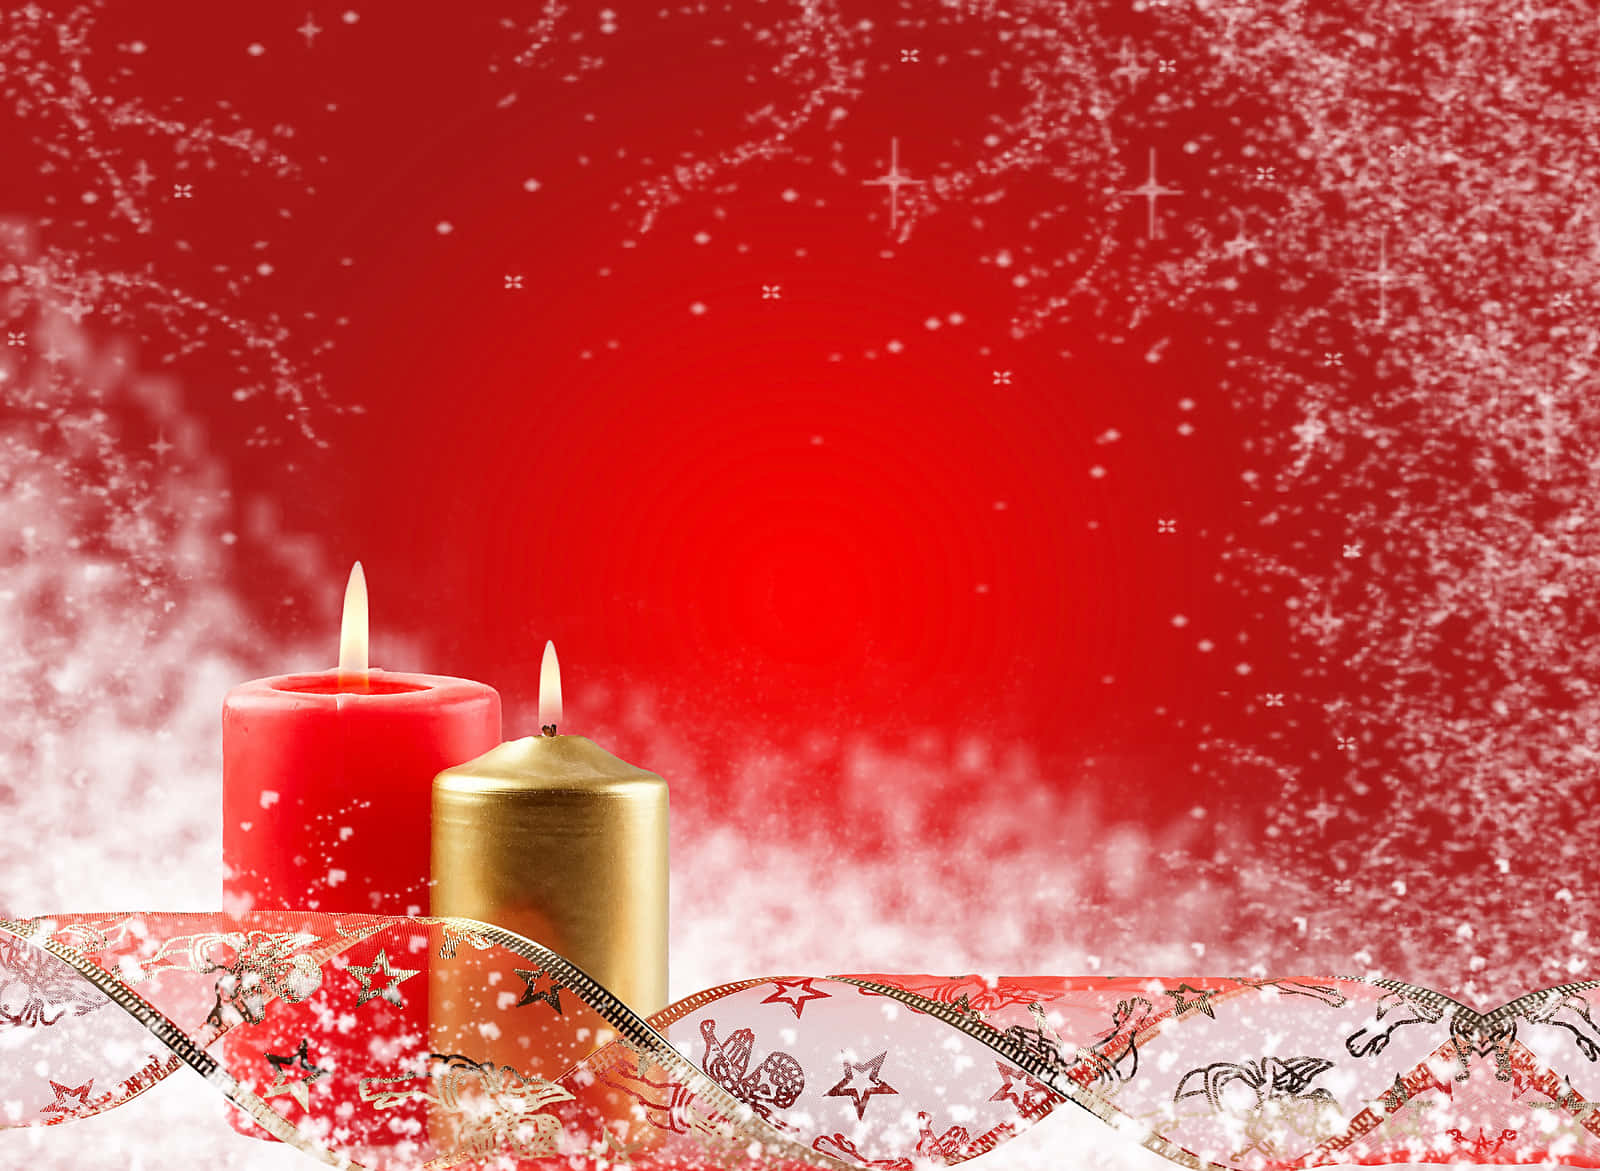 Enjoy The Festive Red Aesthetic This Christmas Wallpaper